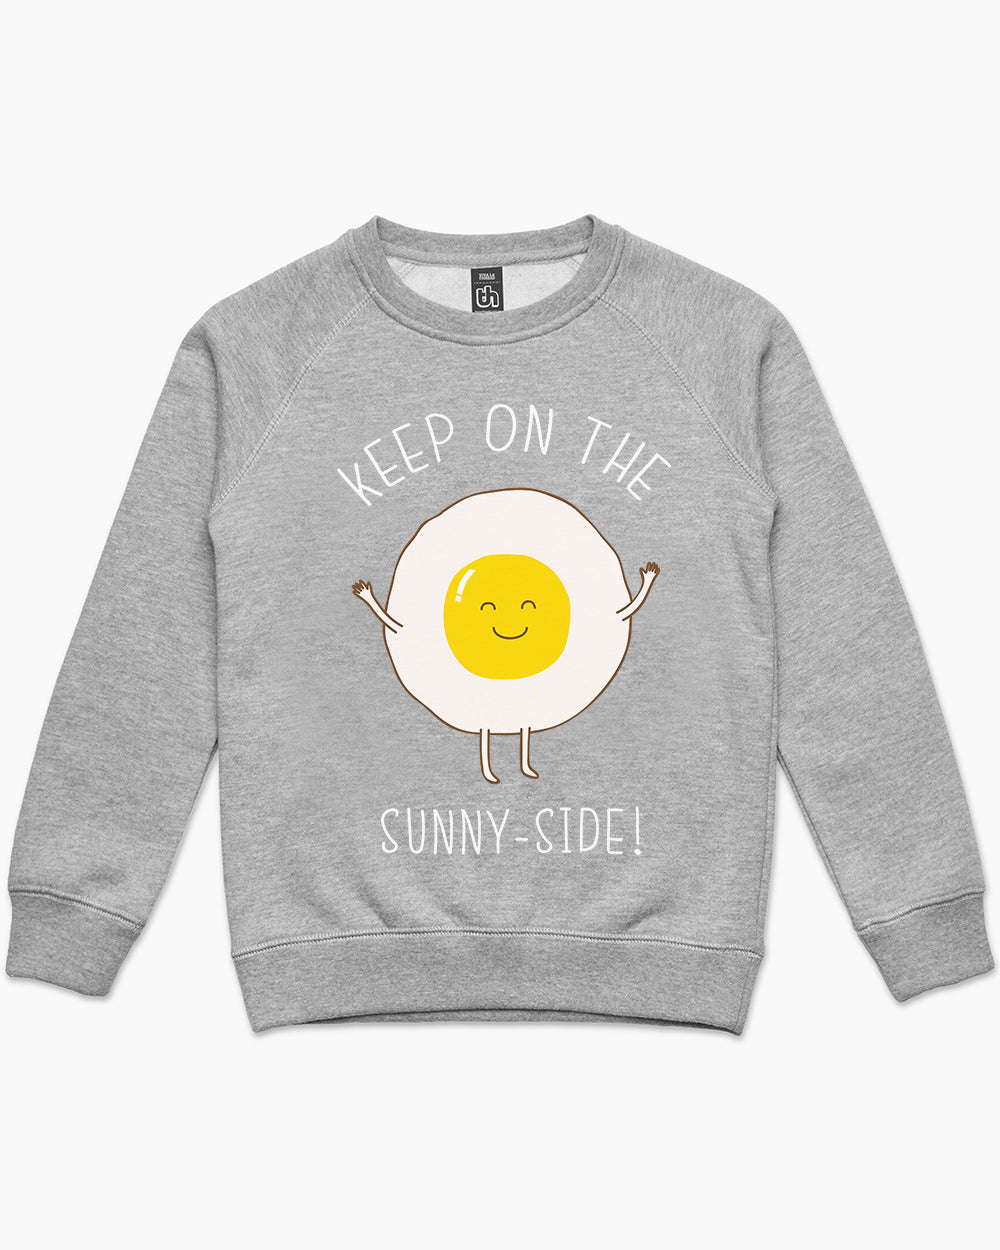 Keep on the Sunnyside Kids Sweater Australia Online #colour_grey